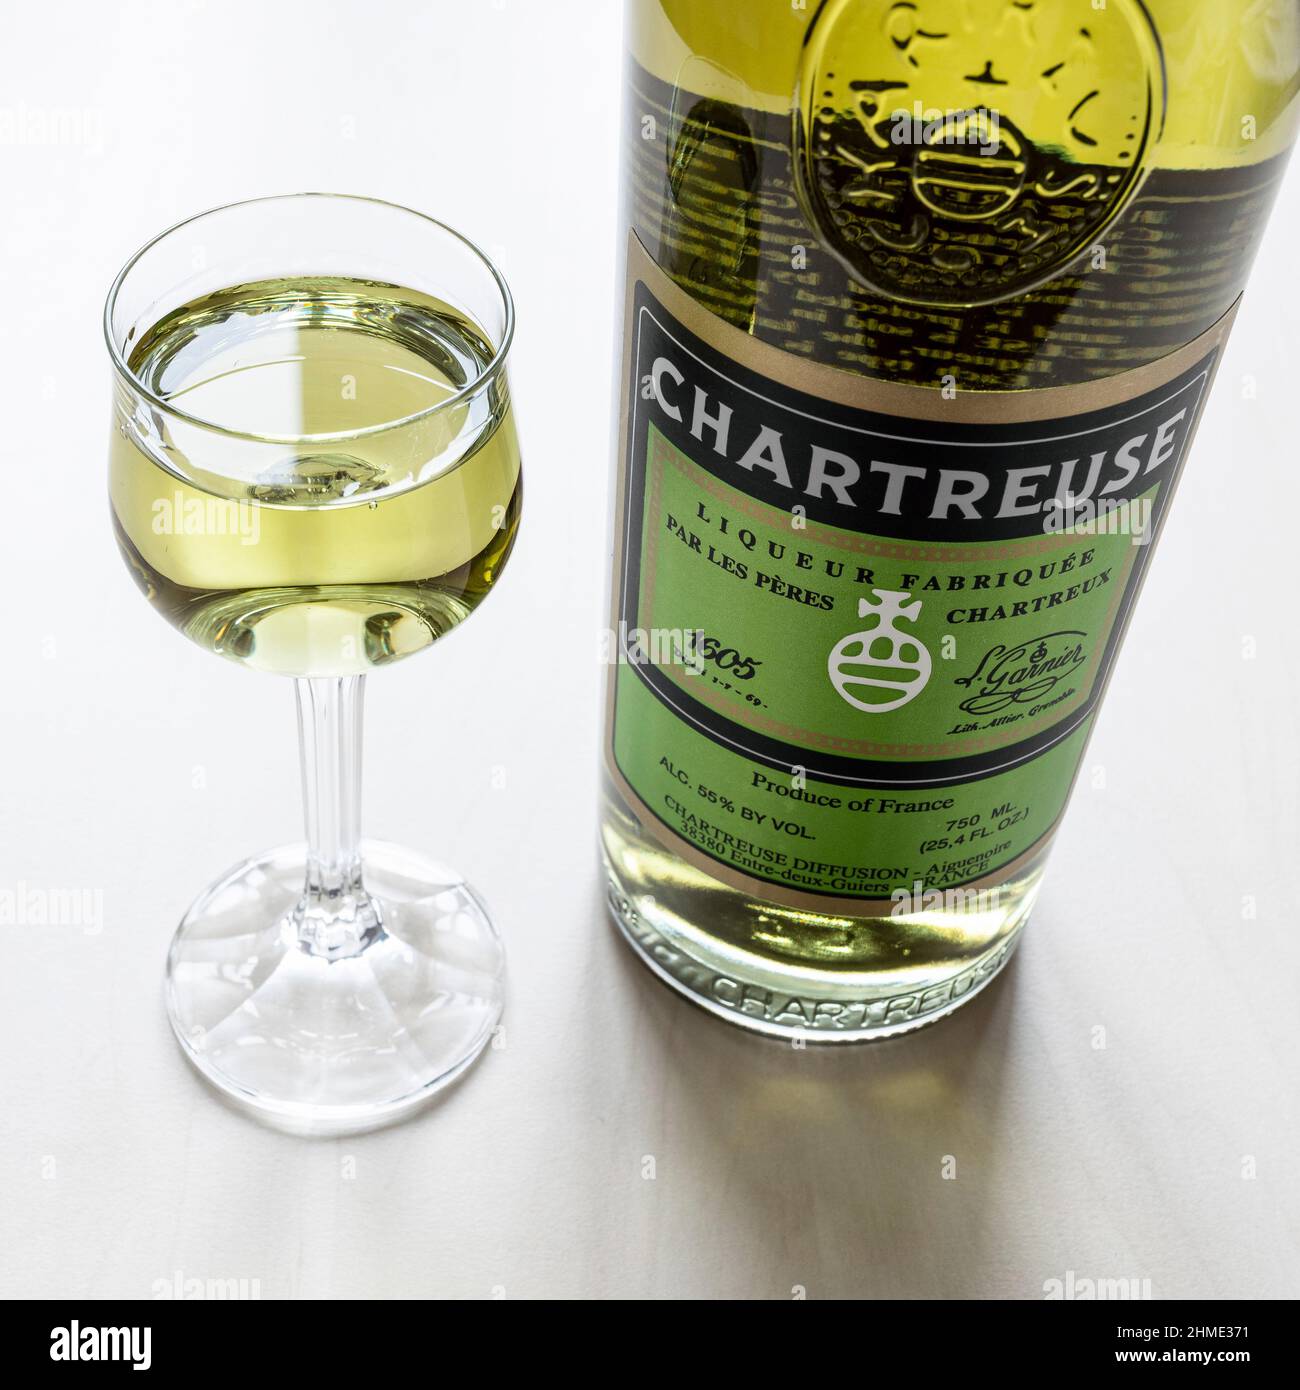 Chartreuse Jaune Yellow Liqueur Isere, France 750ml